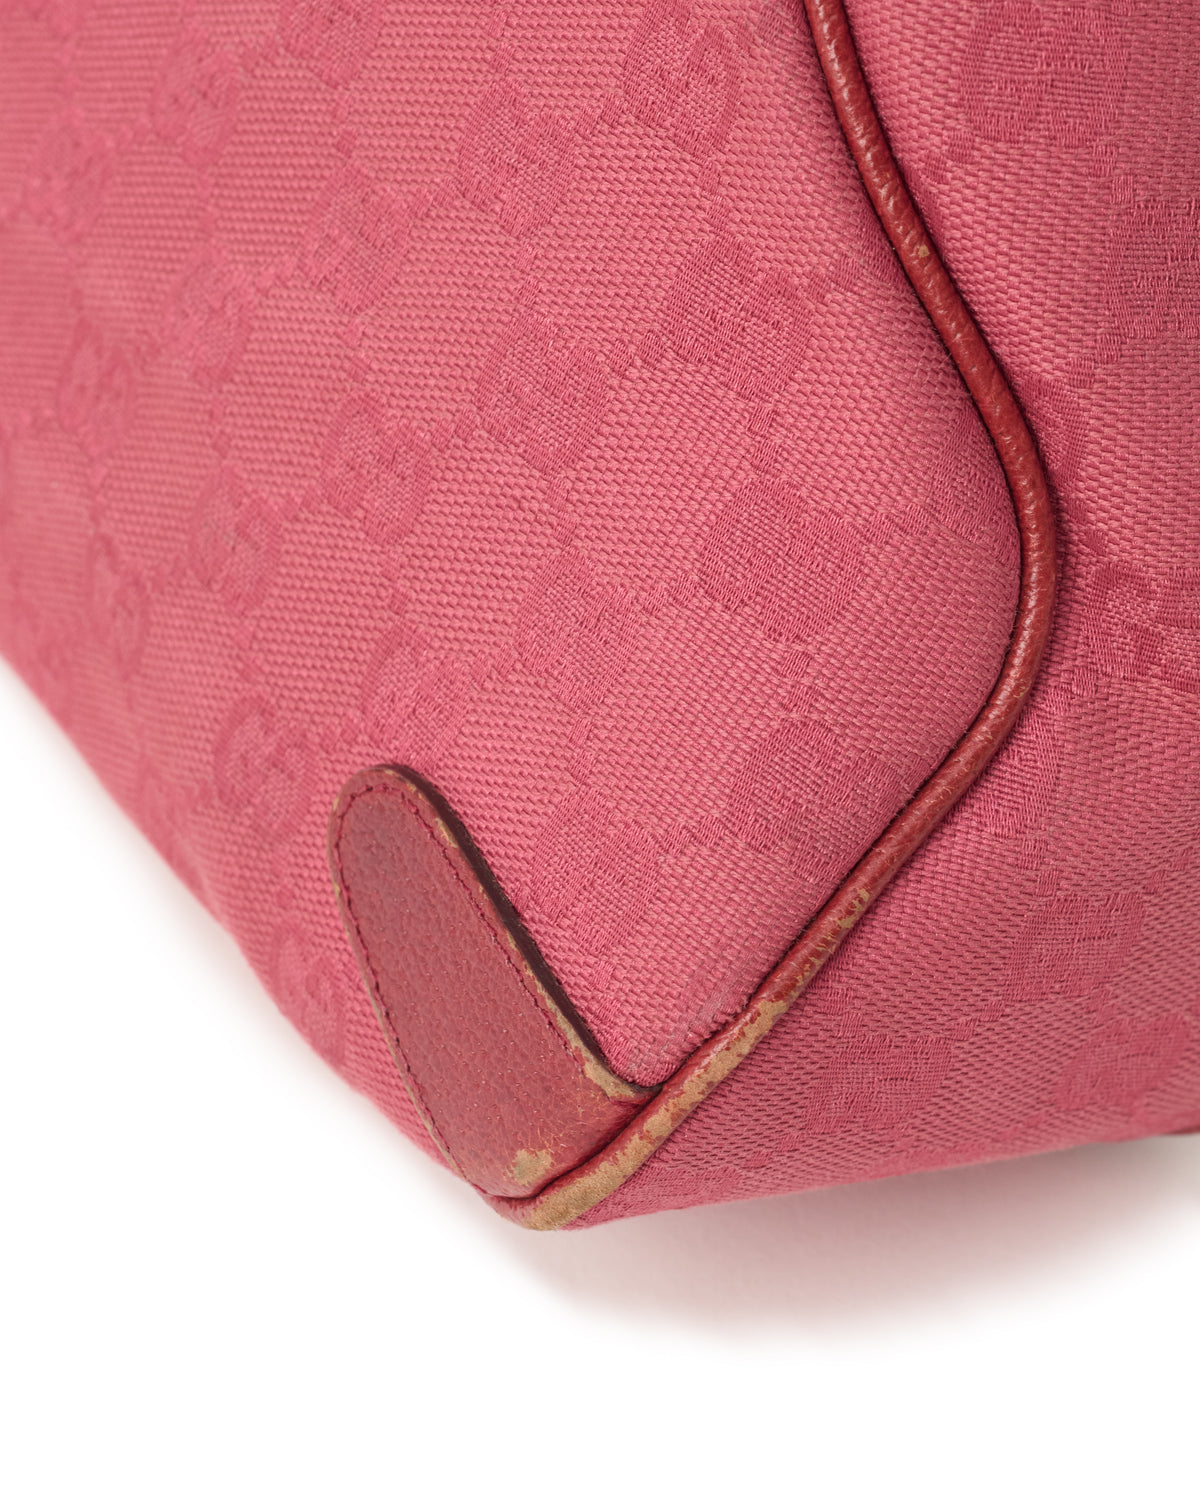 Pre-Owned Gucci Horsebit Chain Shoulder Bag